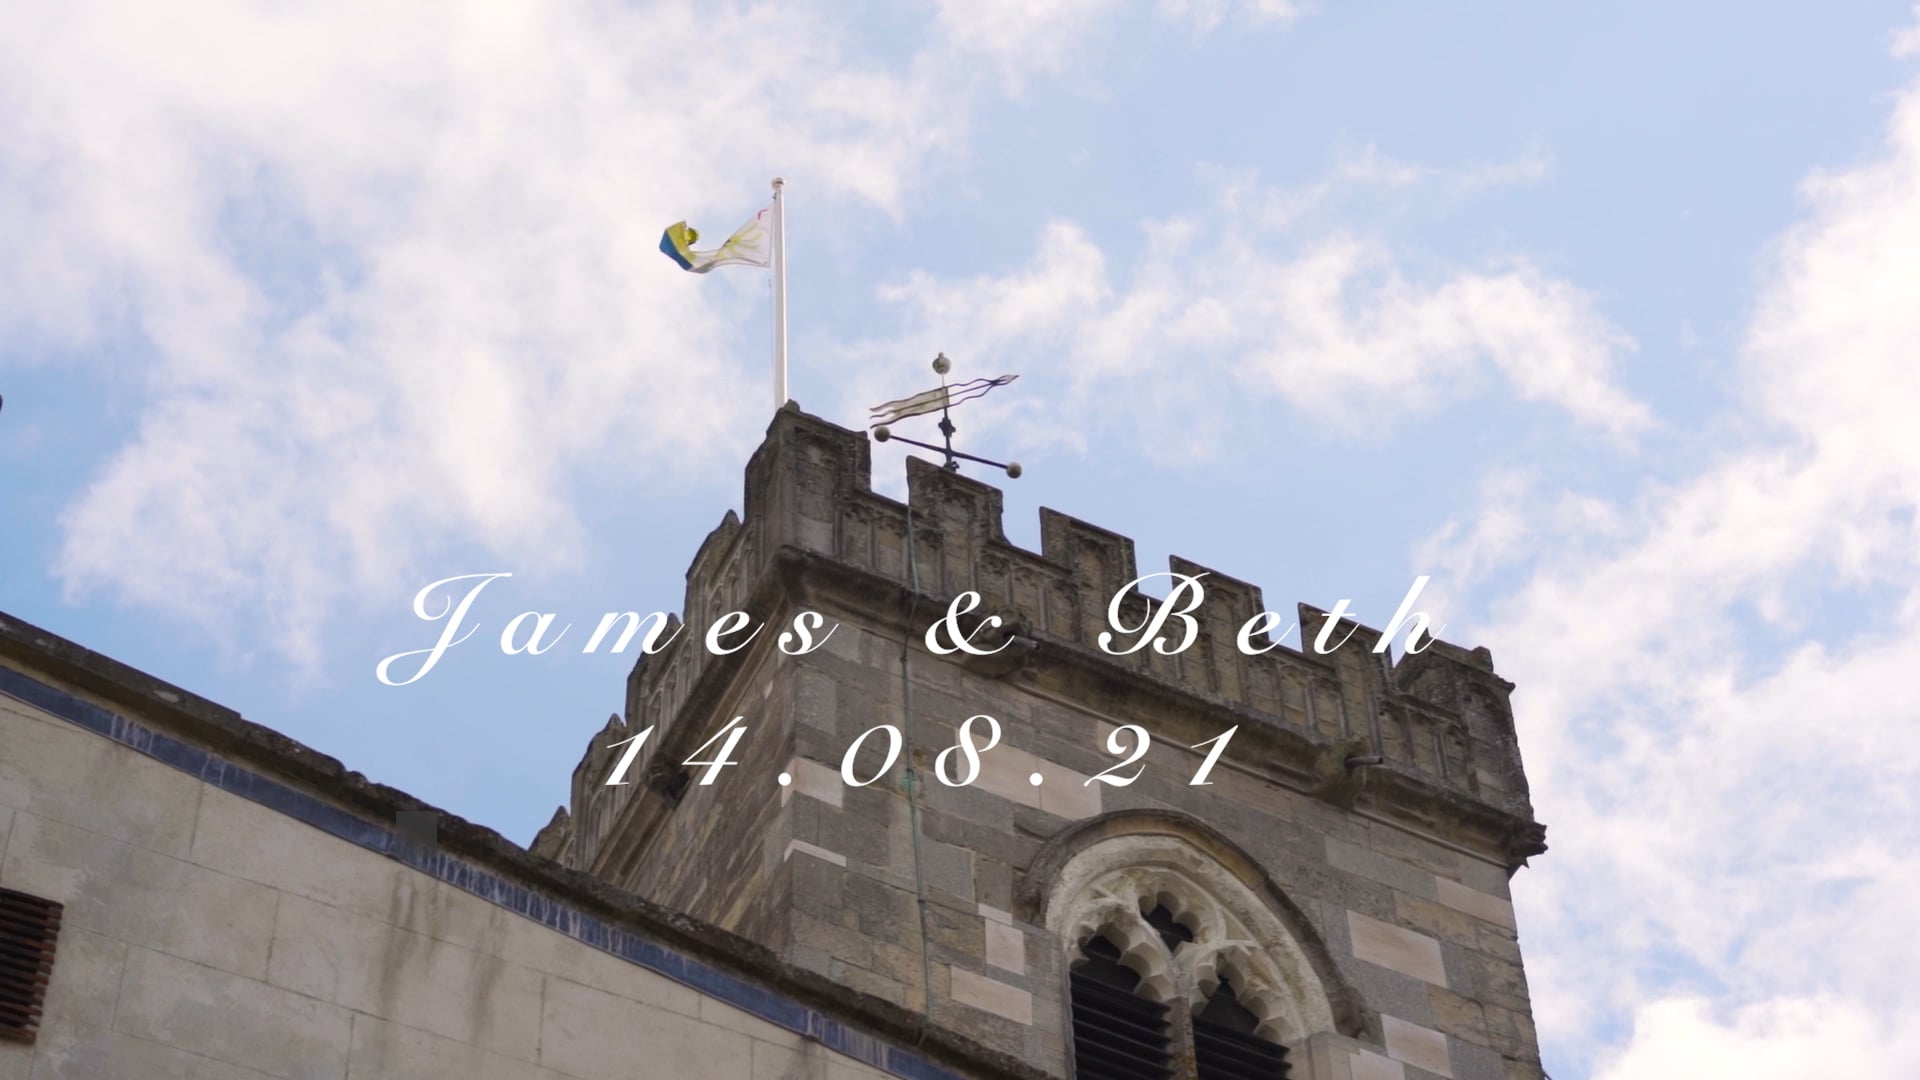 James & Beth | Wedding Trailer | 14.08.21